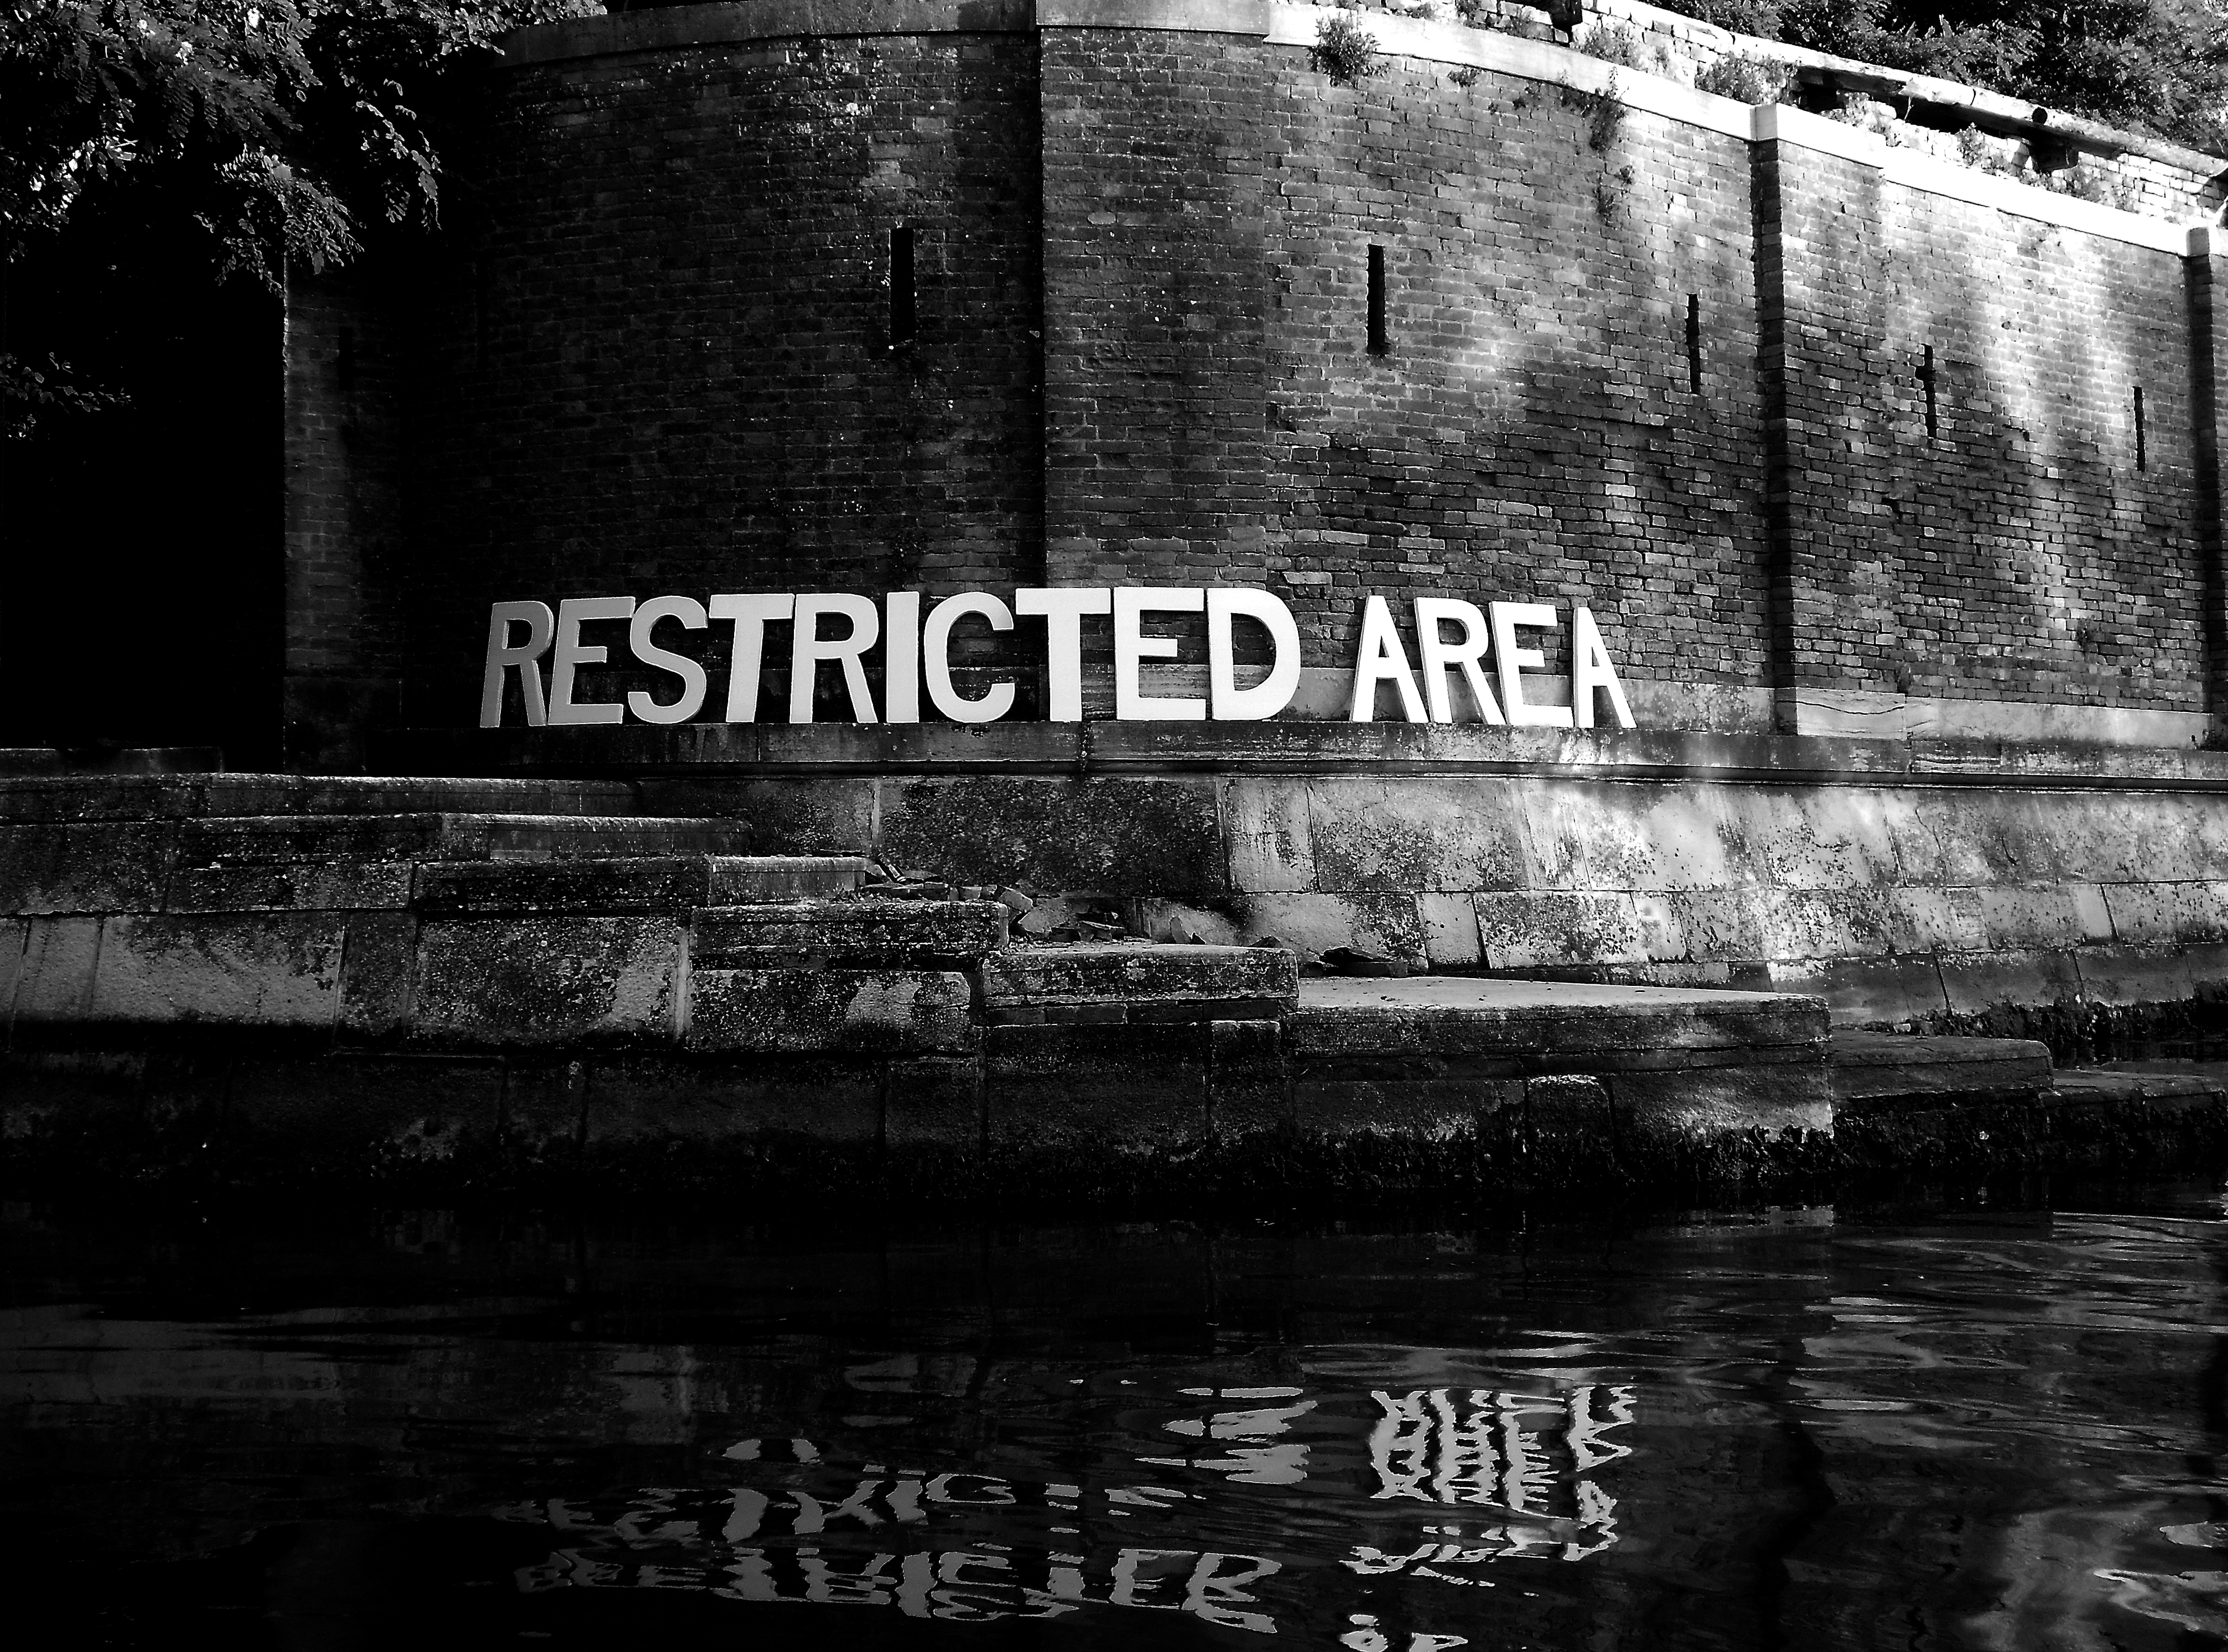 Photo of installation "Restricted Area" courtesy artist Raffaele Vargas